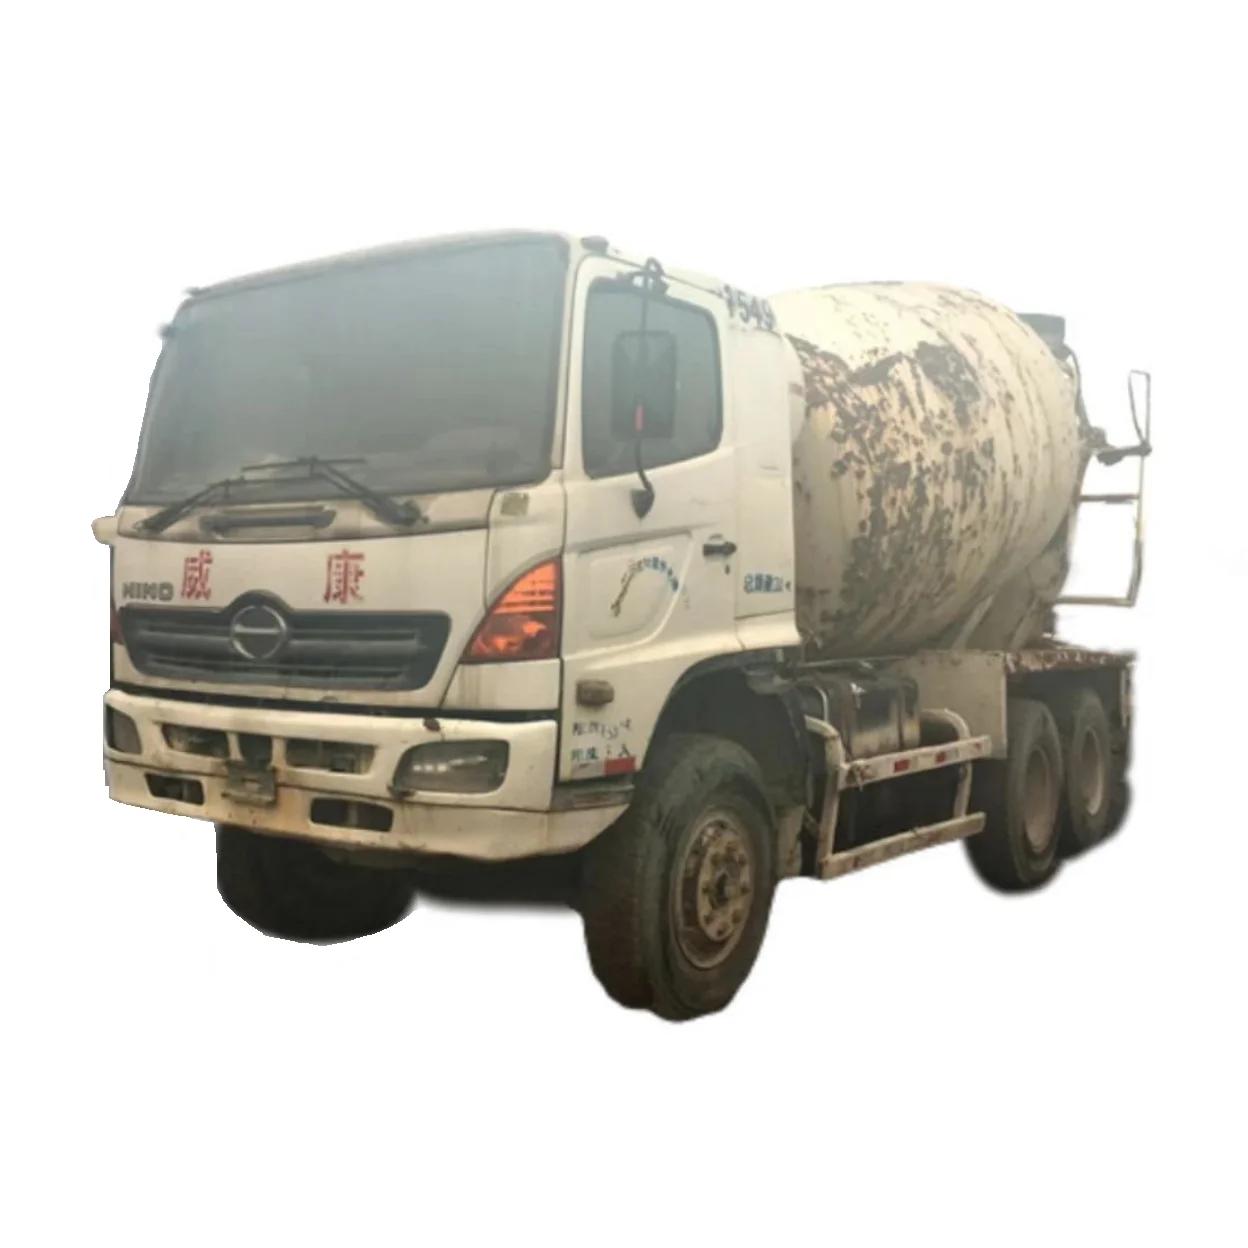 Discount Wholesale Isuzu 9m3 Used Concrete Mixer Truck China (1600524646145)